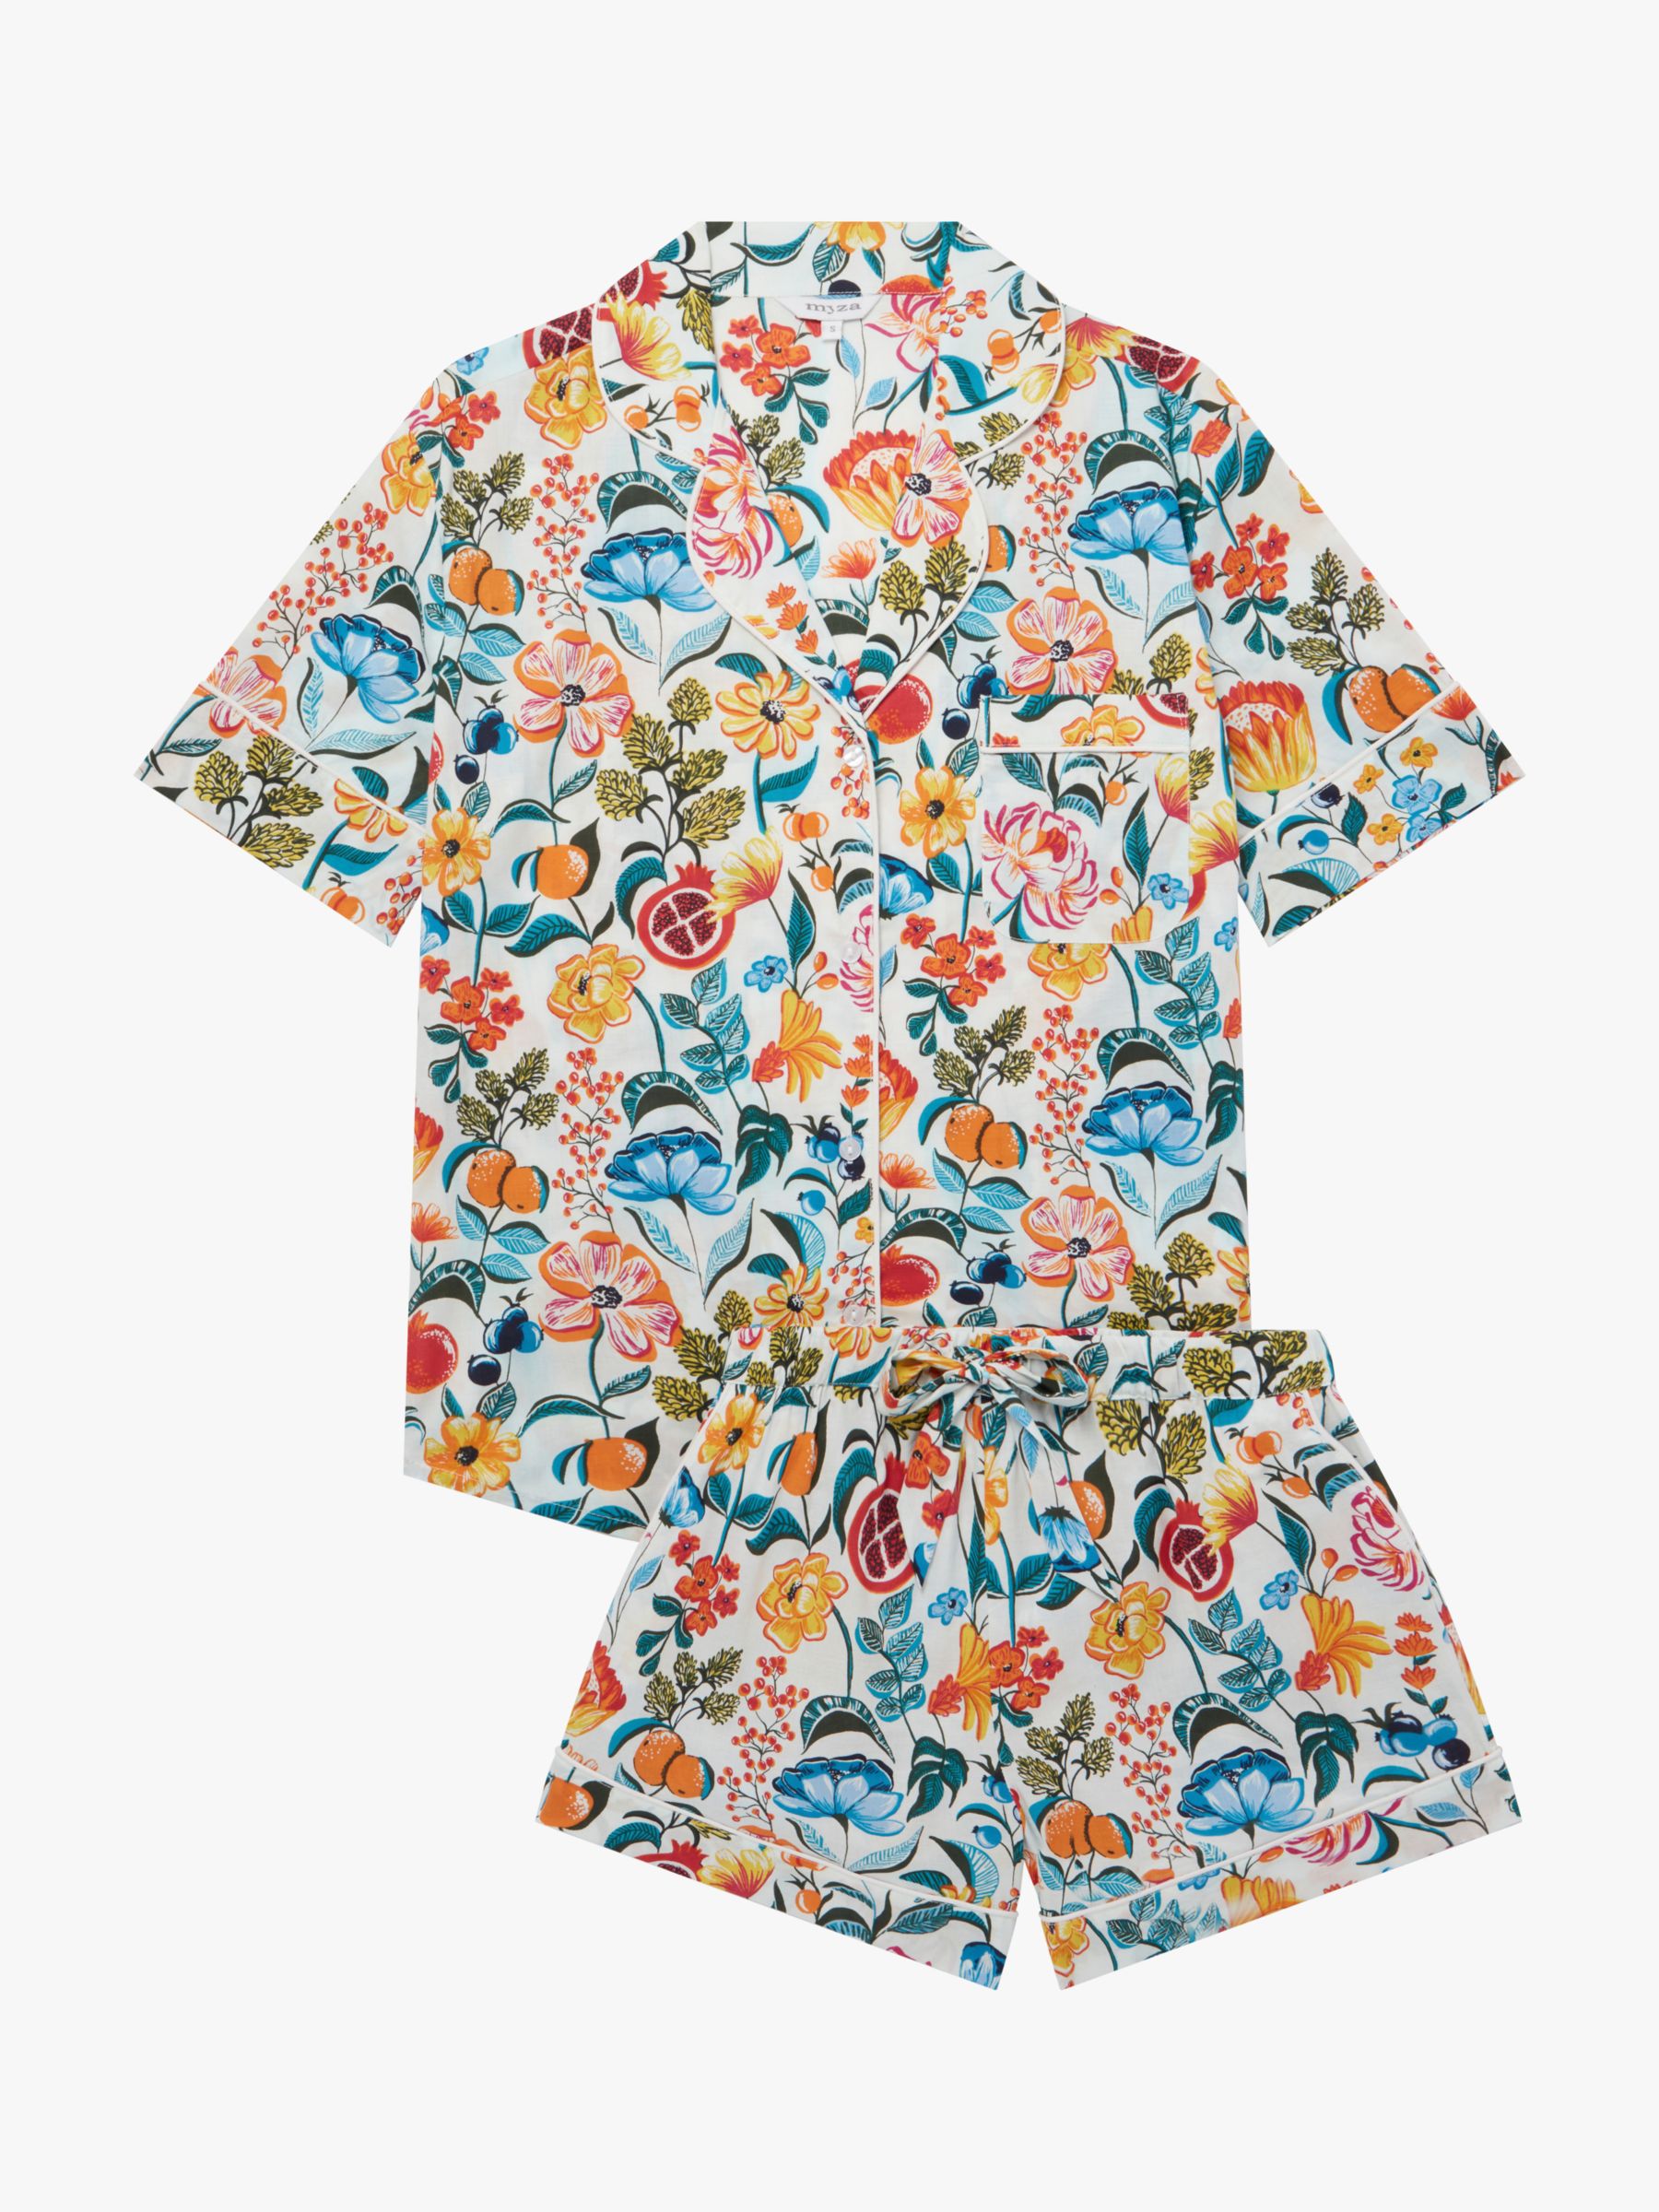 myza Favourite Travels Floral Short Pyjama Set, Multi, M